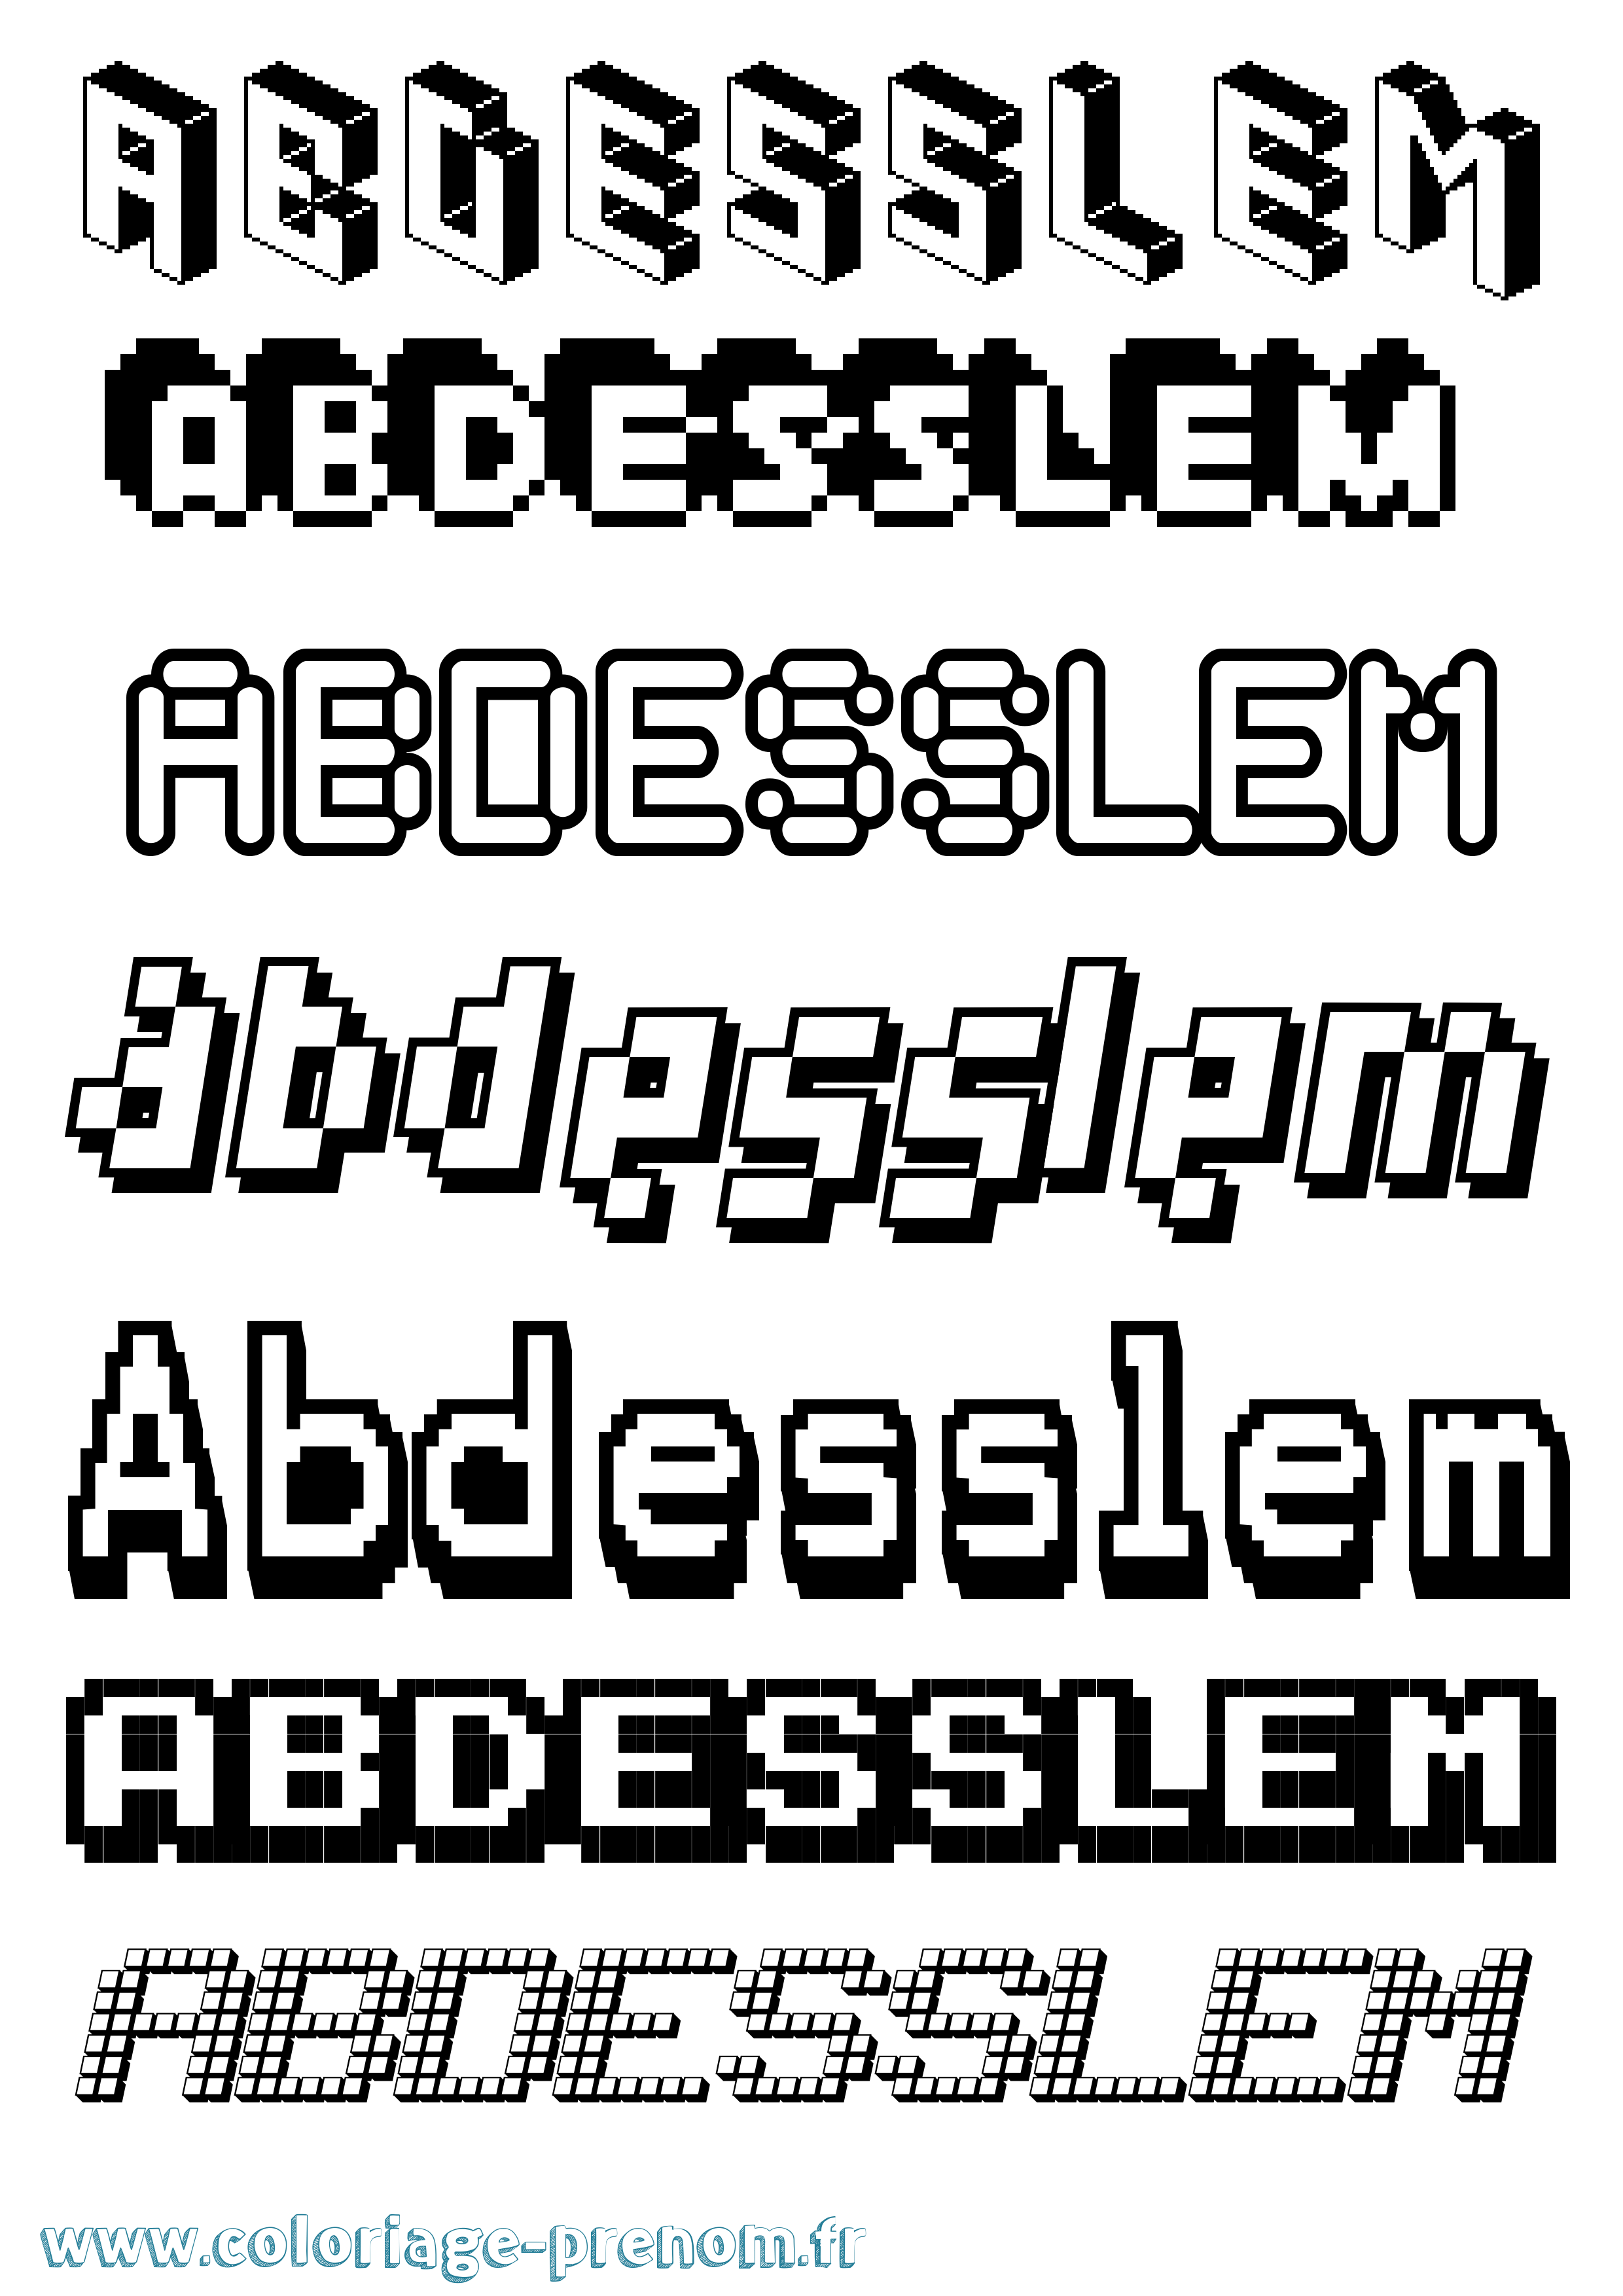 Coloriage prénom Abdesslem Pixel